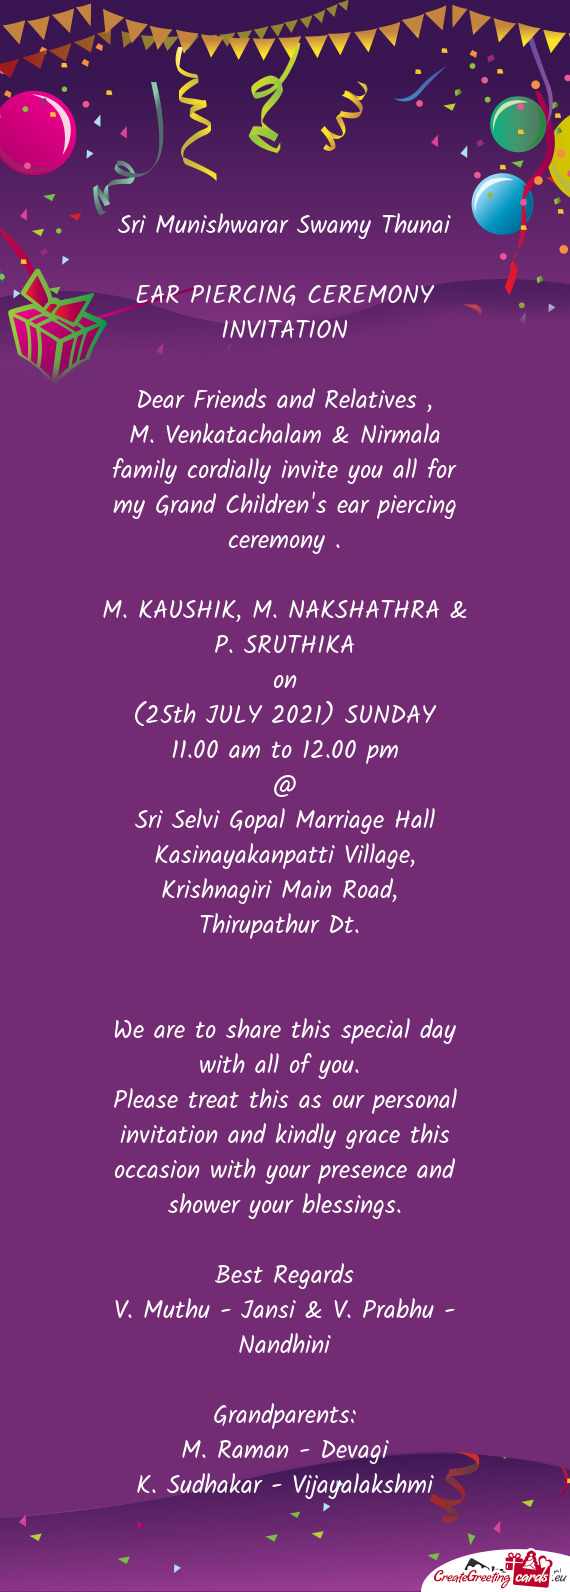 Venkatachalam & Nirmala family cordially invite you all for my Grand Children's ear piercing ceremo